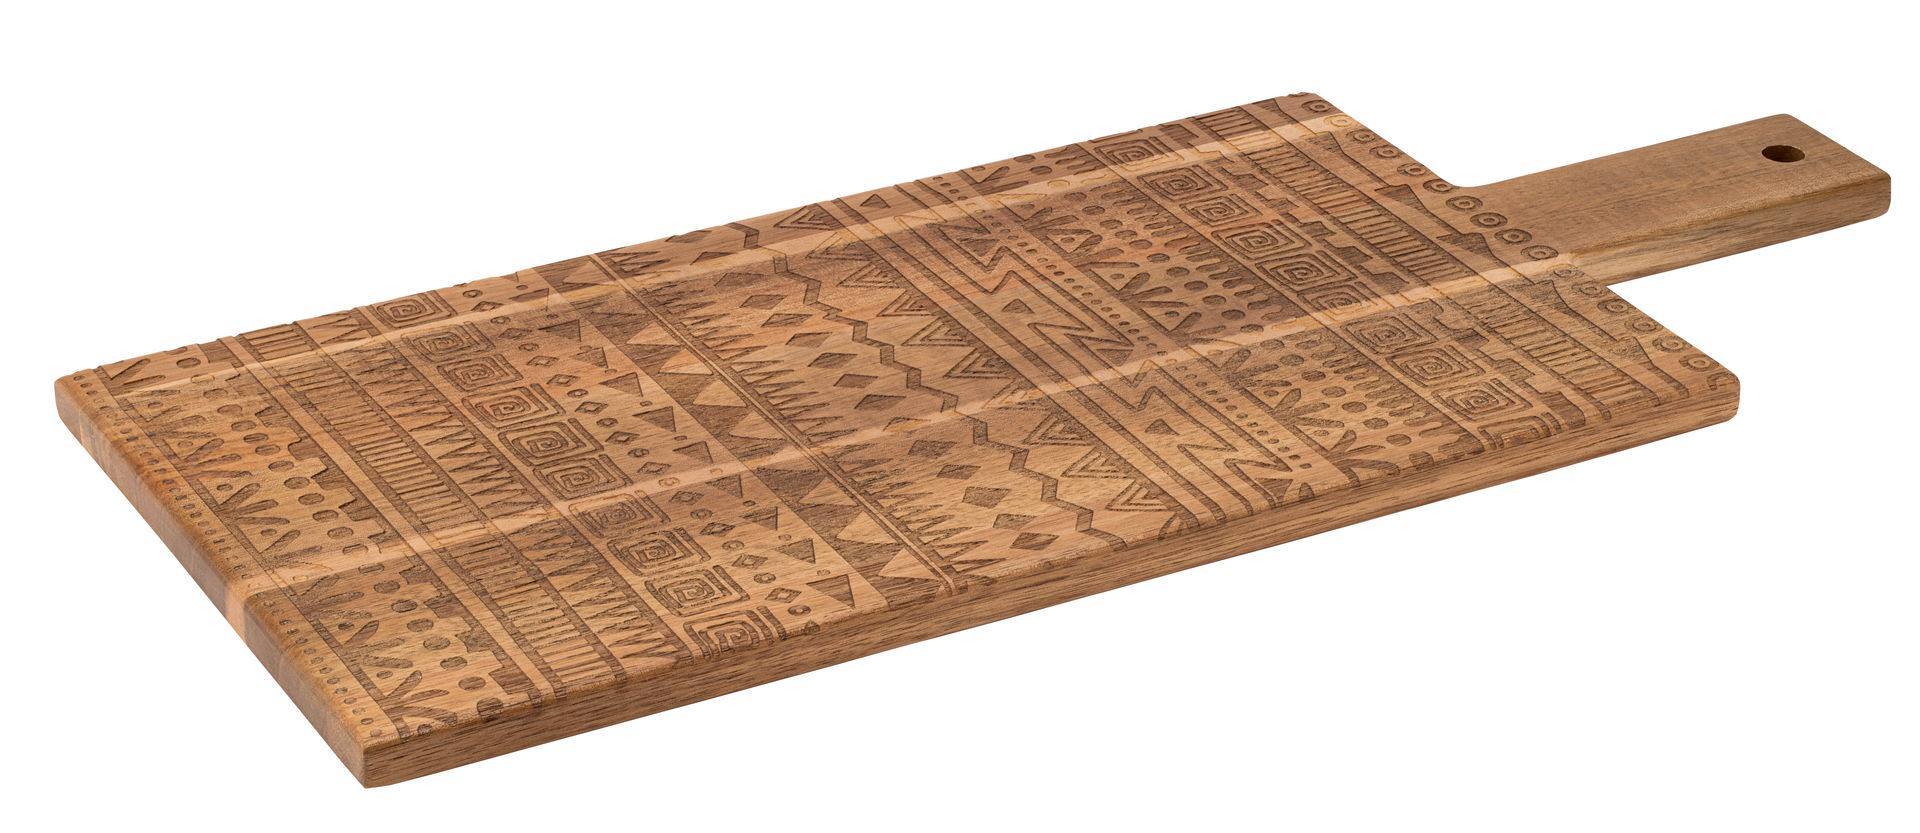 Tribal Handled Wood 50 x 22cm - JMP807-000000-B01006 (Pack of 6)